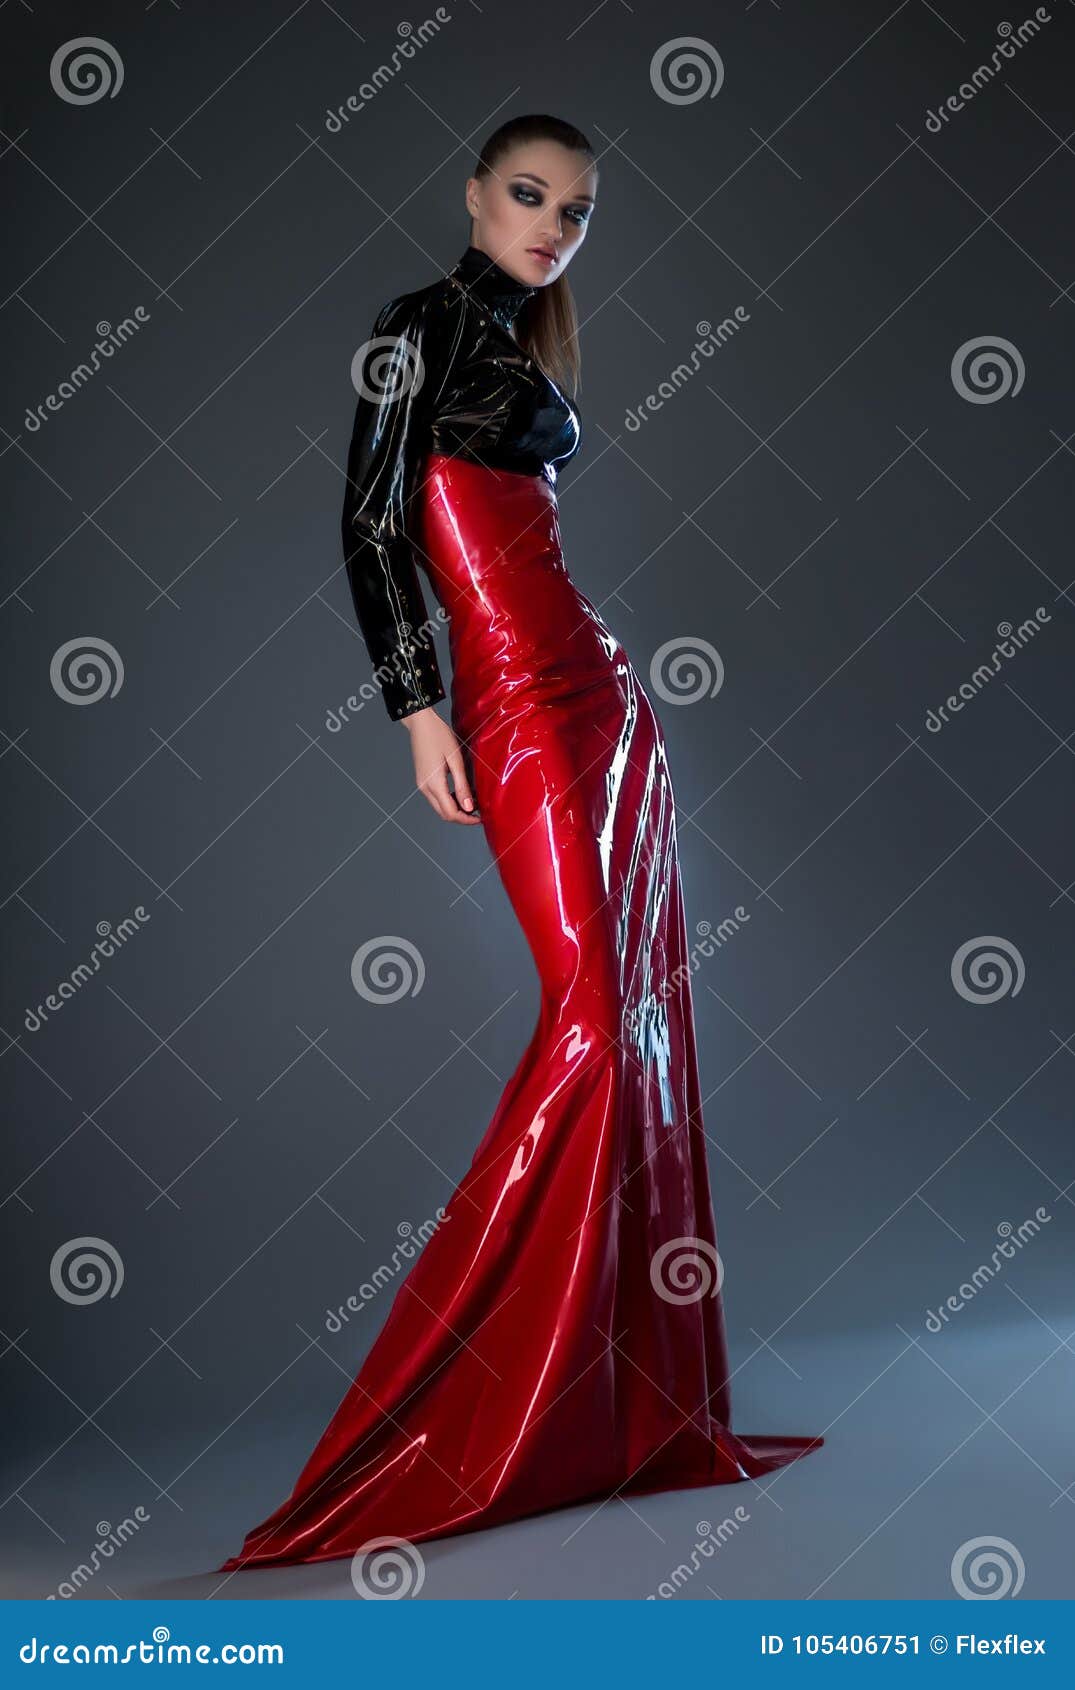 Red Latex Dress Telegraph